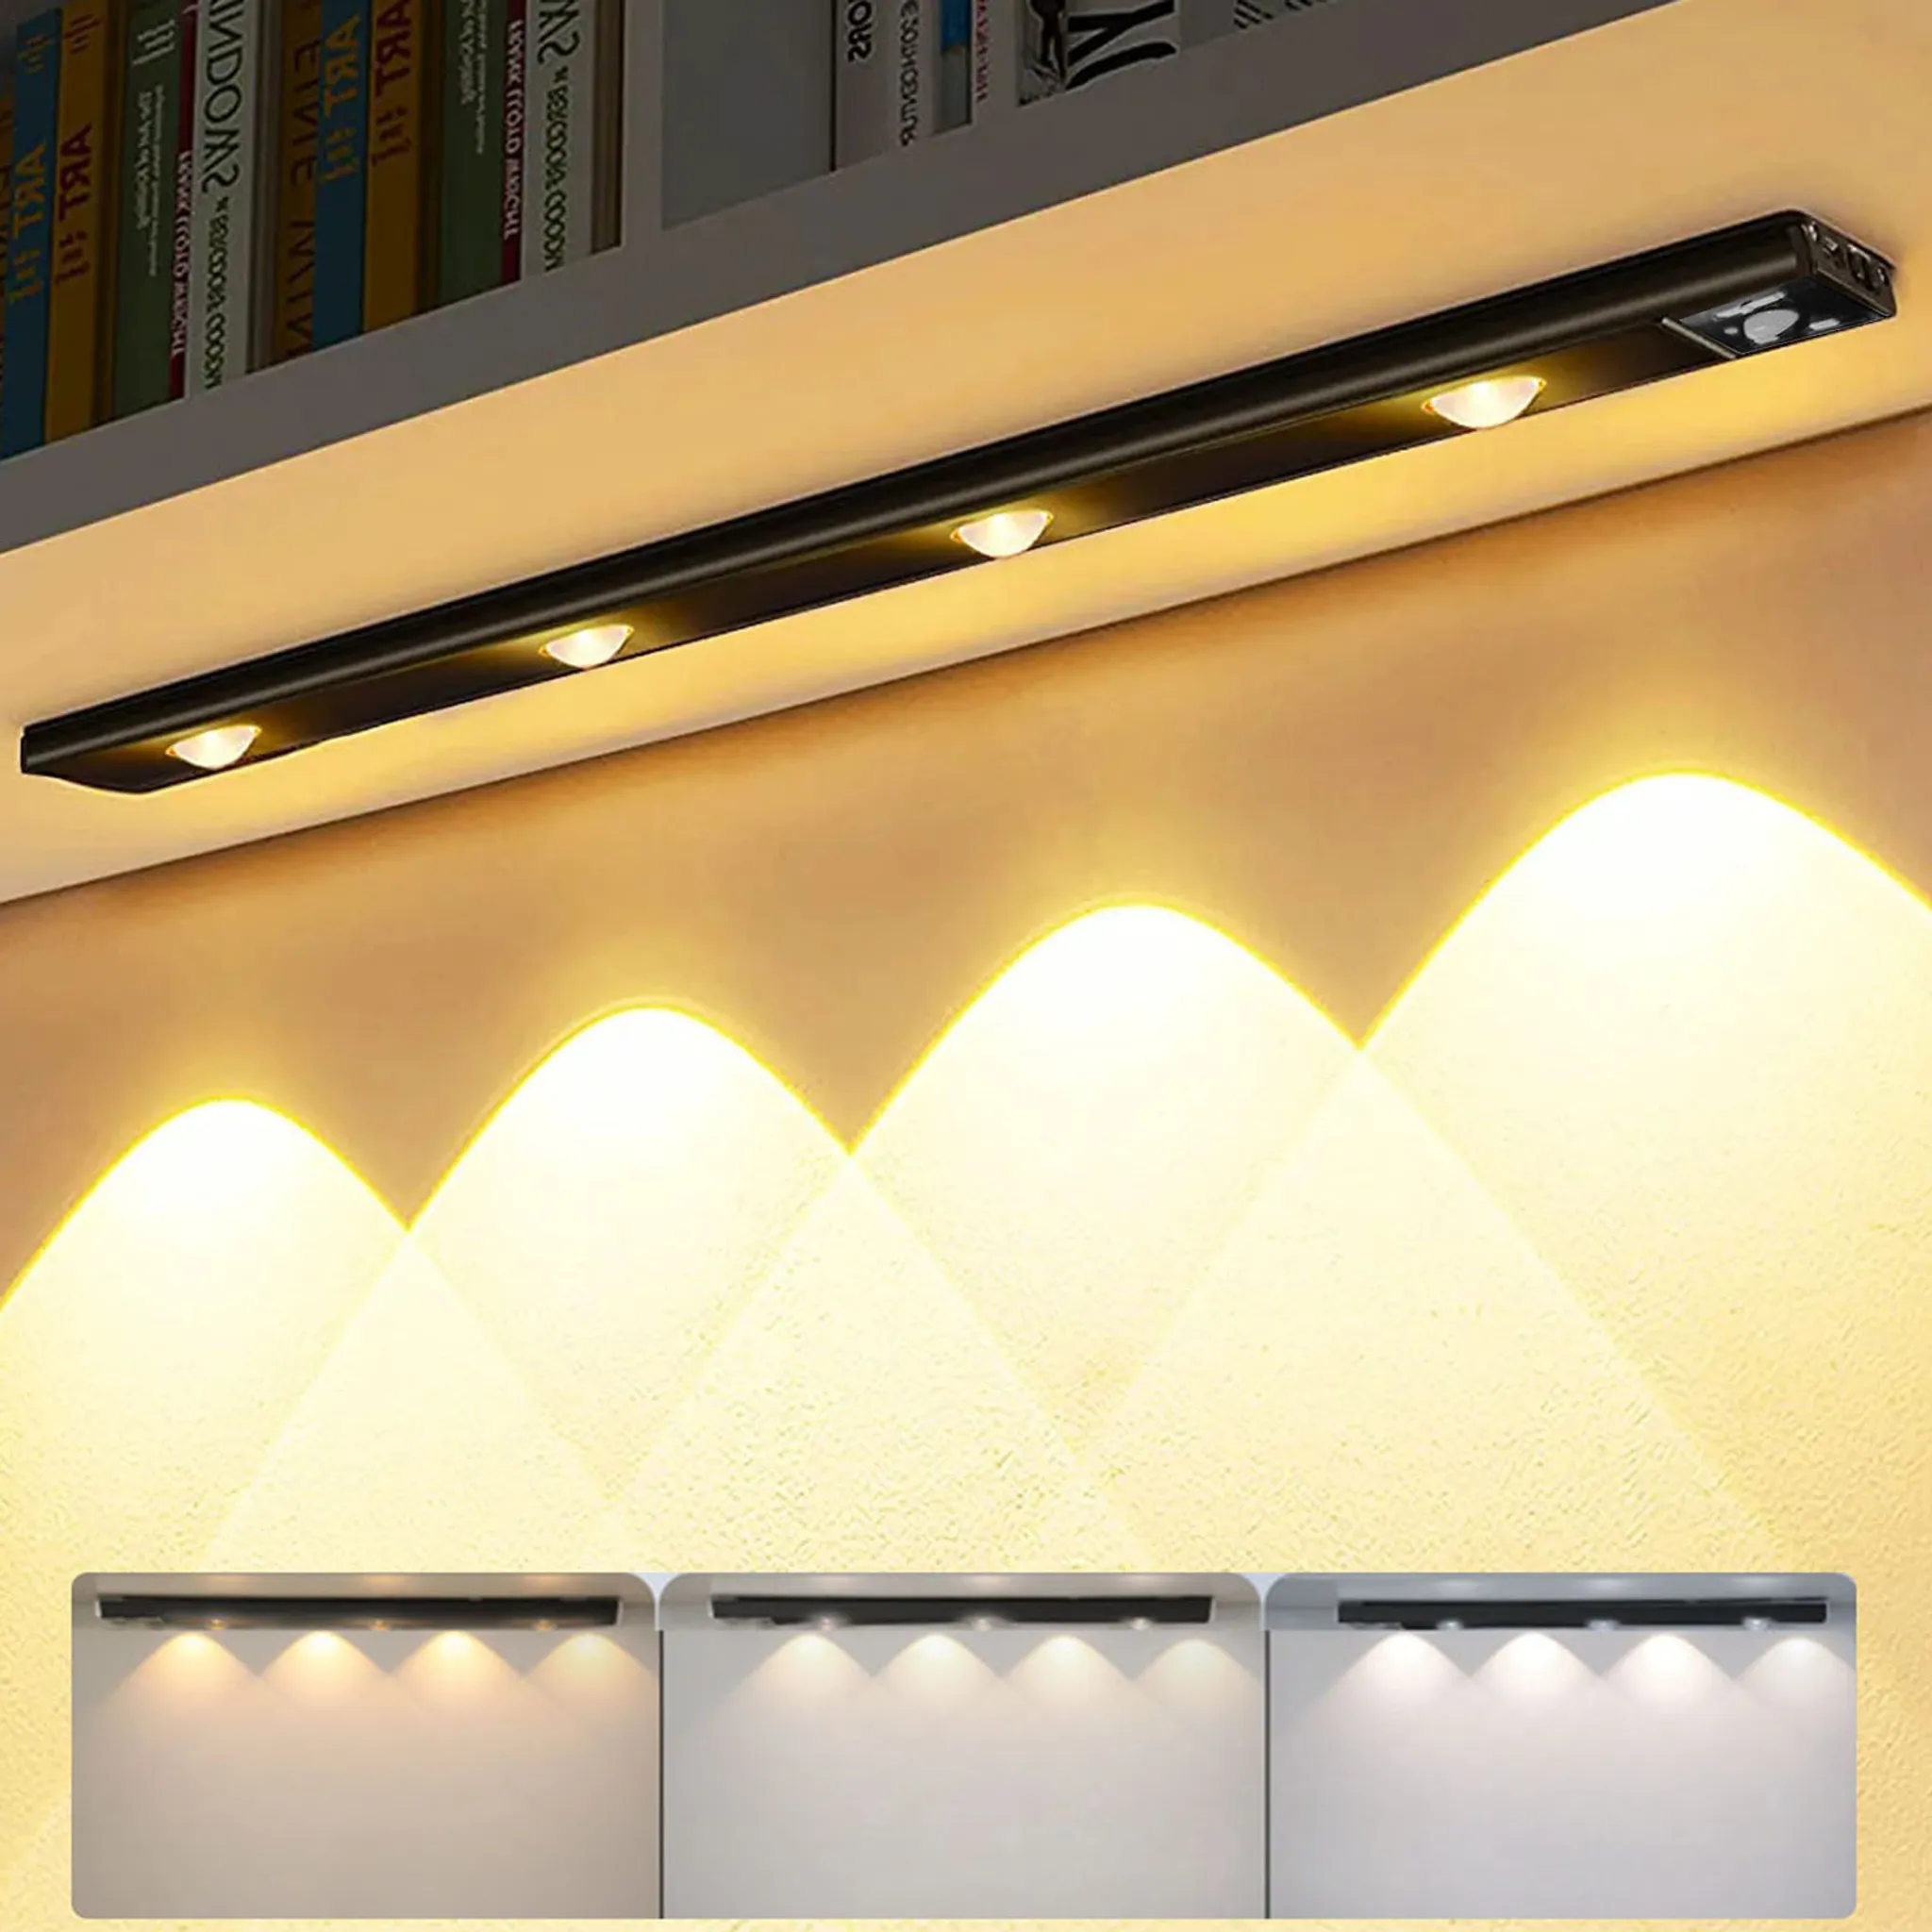 Kaufe Auto-Innen-LED-Licht, kabellose Touch-Beleuchtung mit Magnet